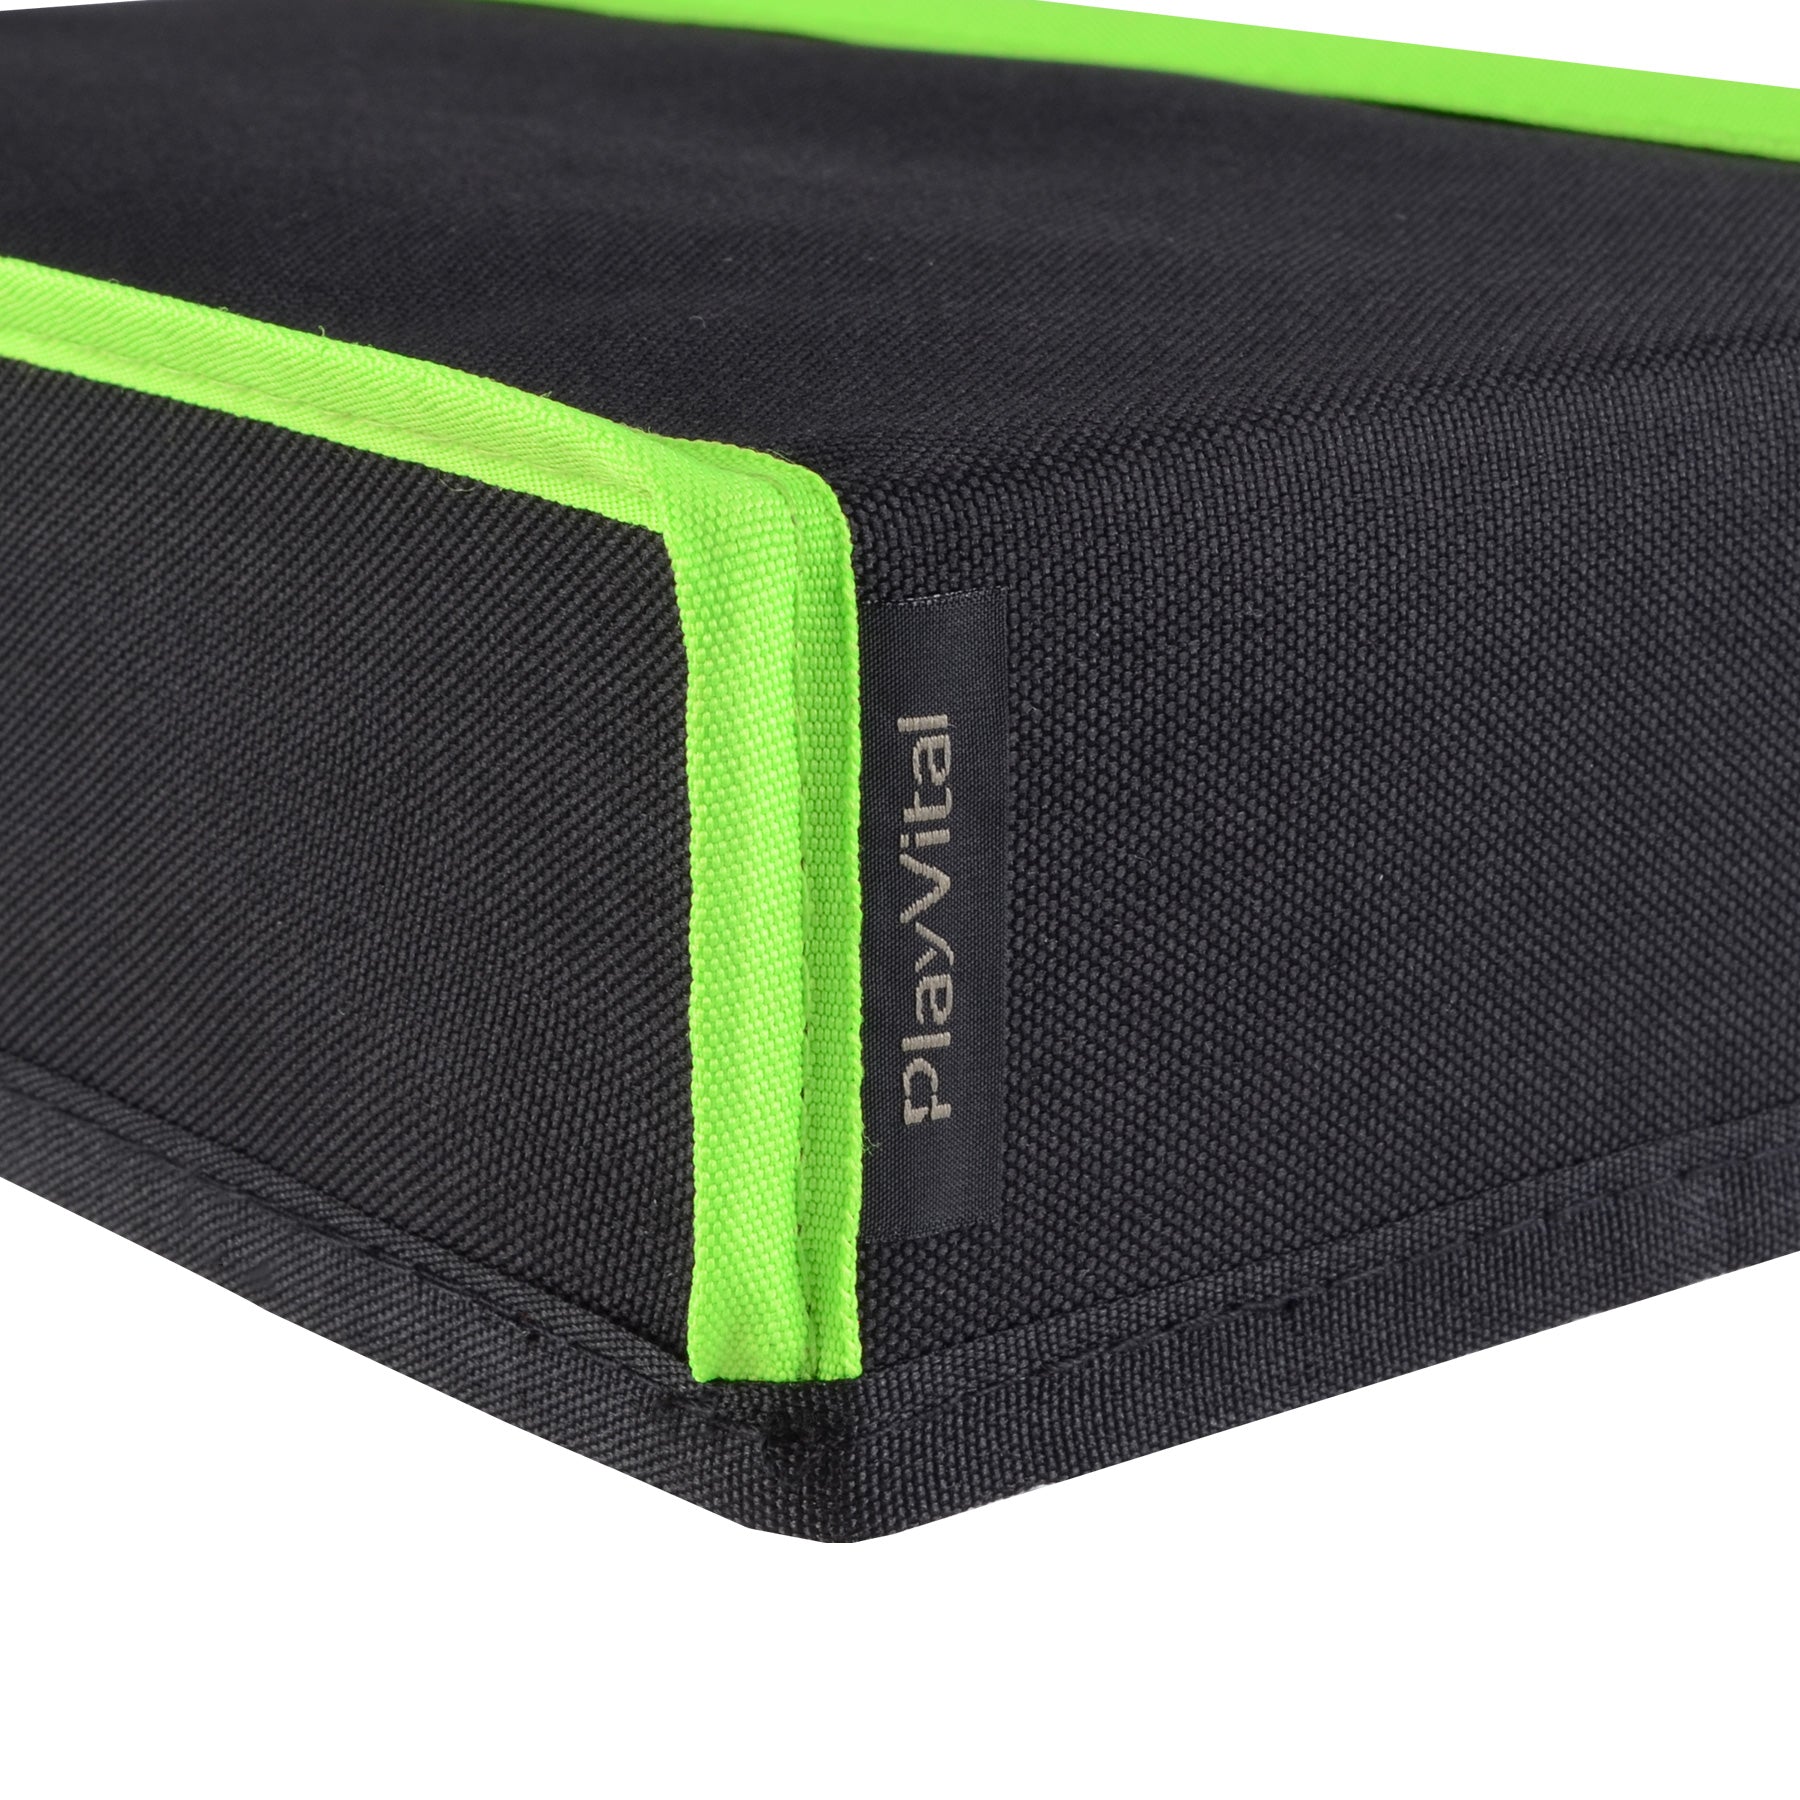 PlayVital Black Nylon Dust Cover for Xbox Series S Console, Soft Neat Lining Dust Guard, Anti Scratch Waterproof Cover Sleeve for Xbox Series S Console - Neon Green Trim - X3PJ021 PlayVital